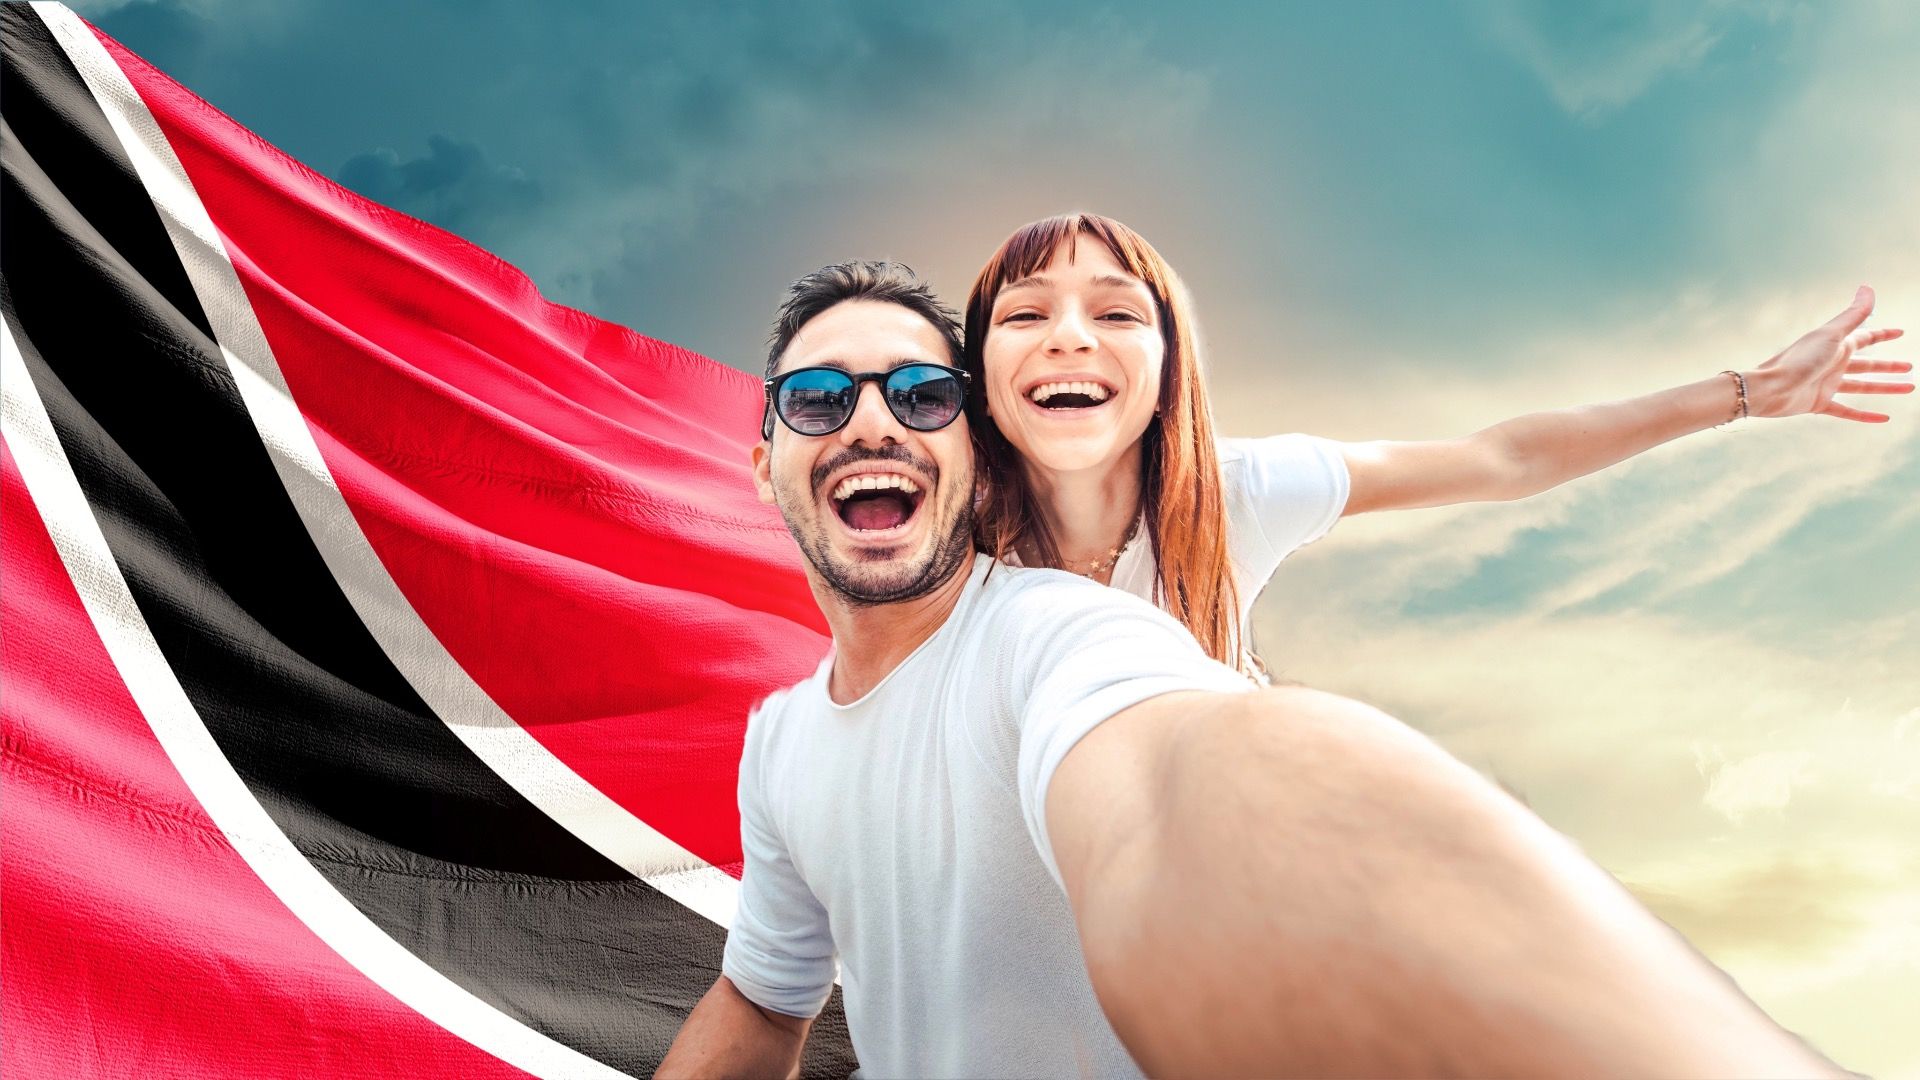 Trinidad and Tobago national flag waving in beautiful sky.